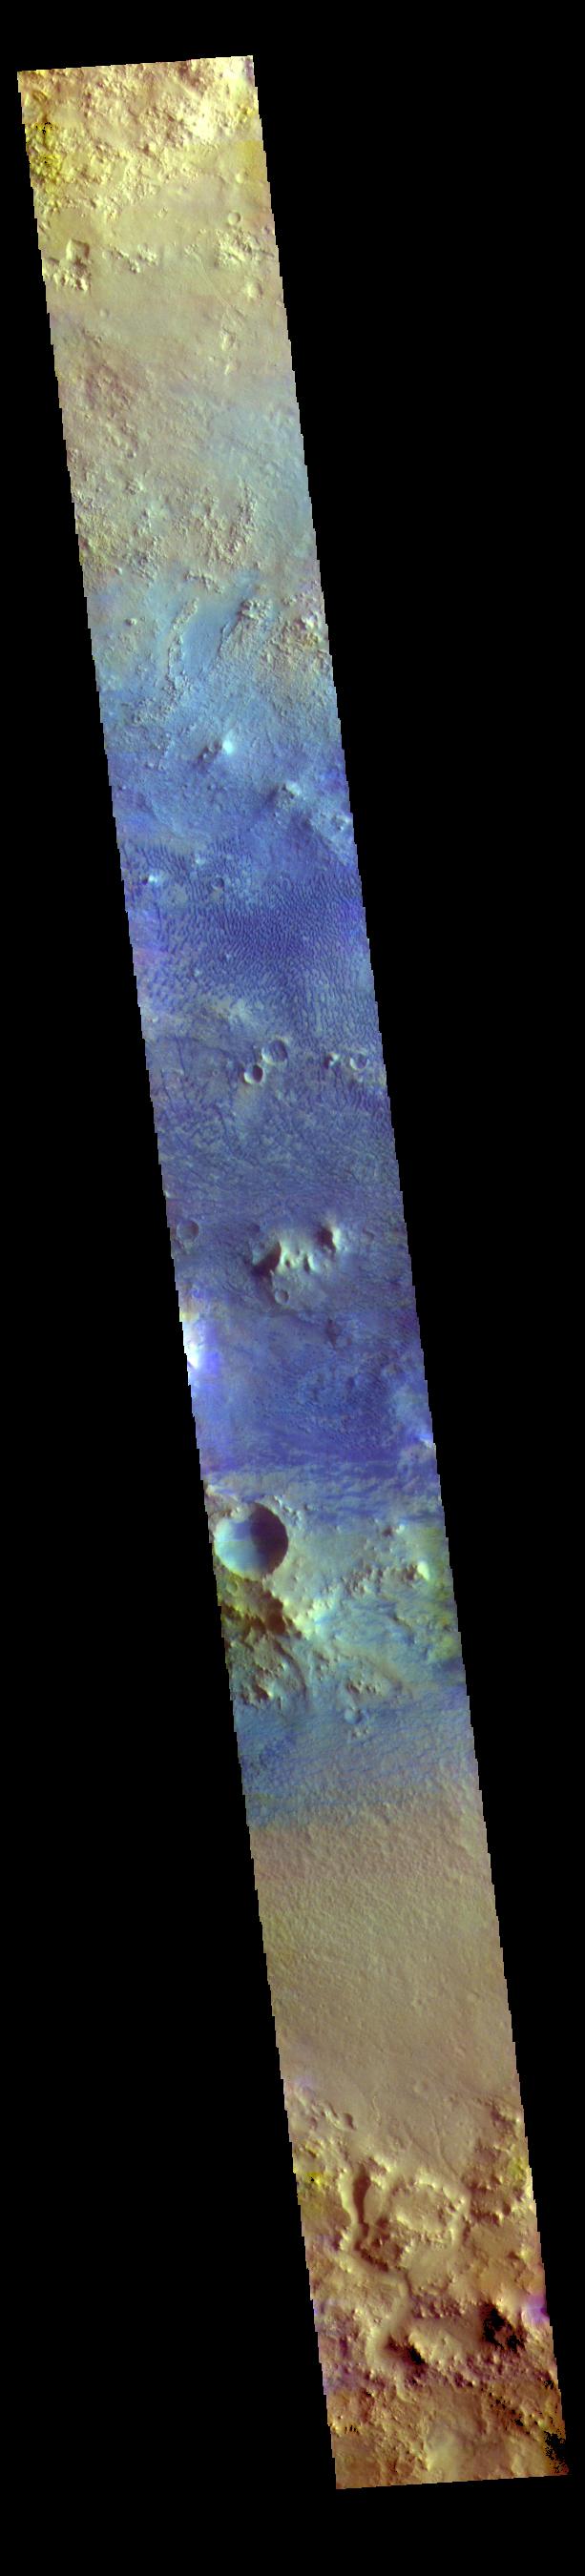 PIA24635: Baldet Crater - False Color